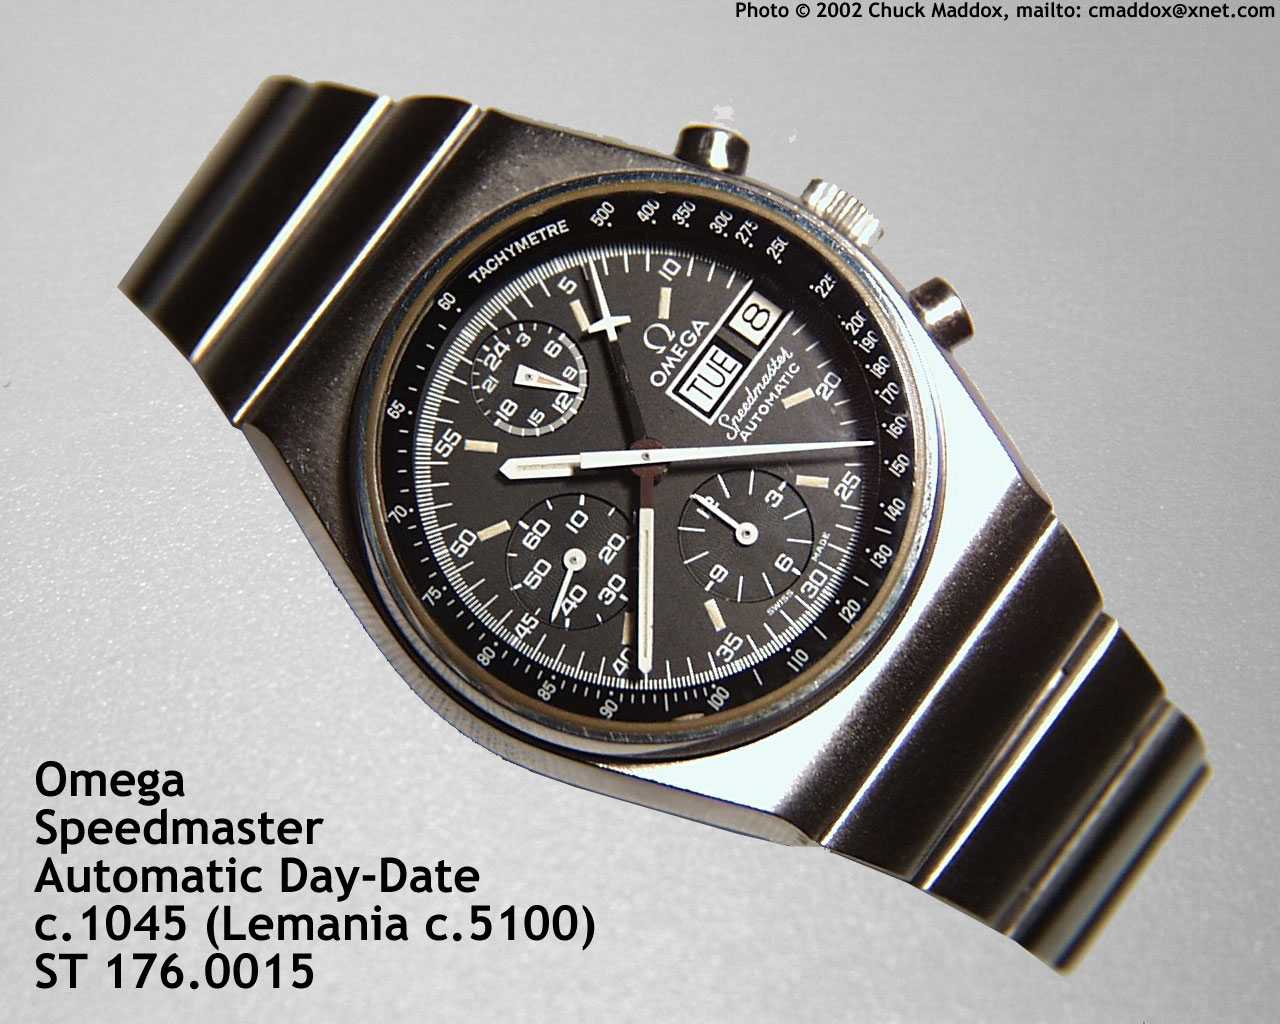 Omega Speedmaster Day-Date c.1045 in Detail